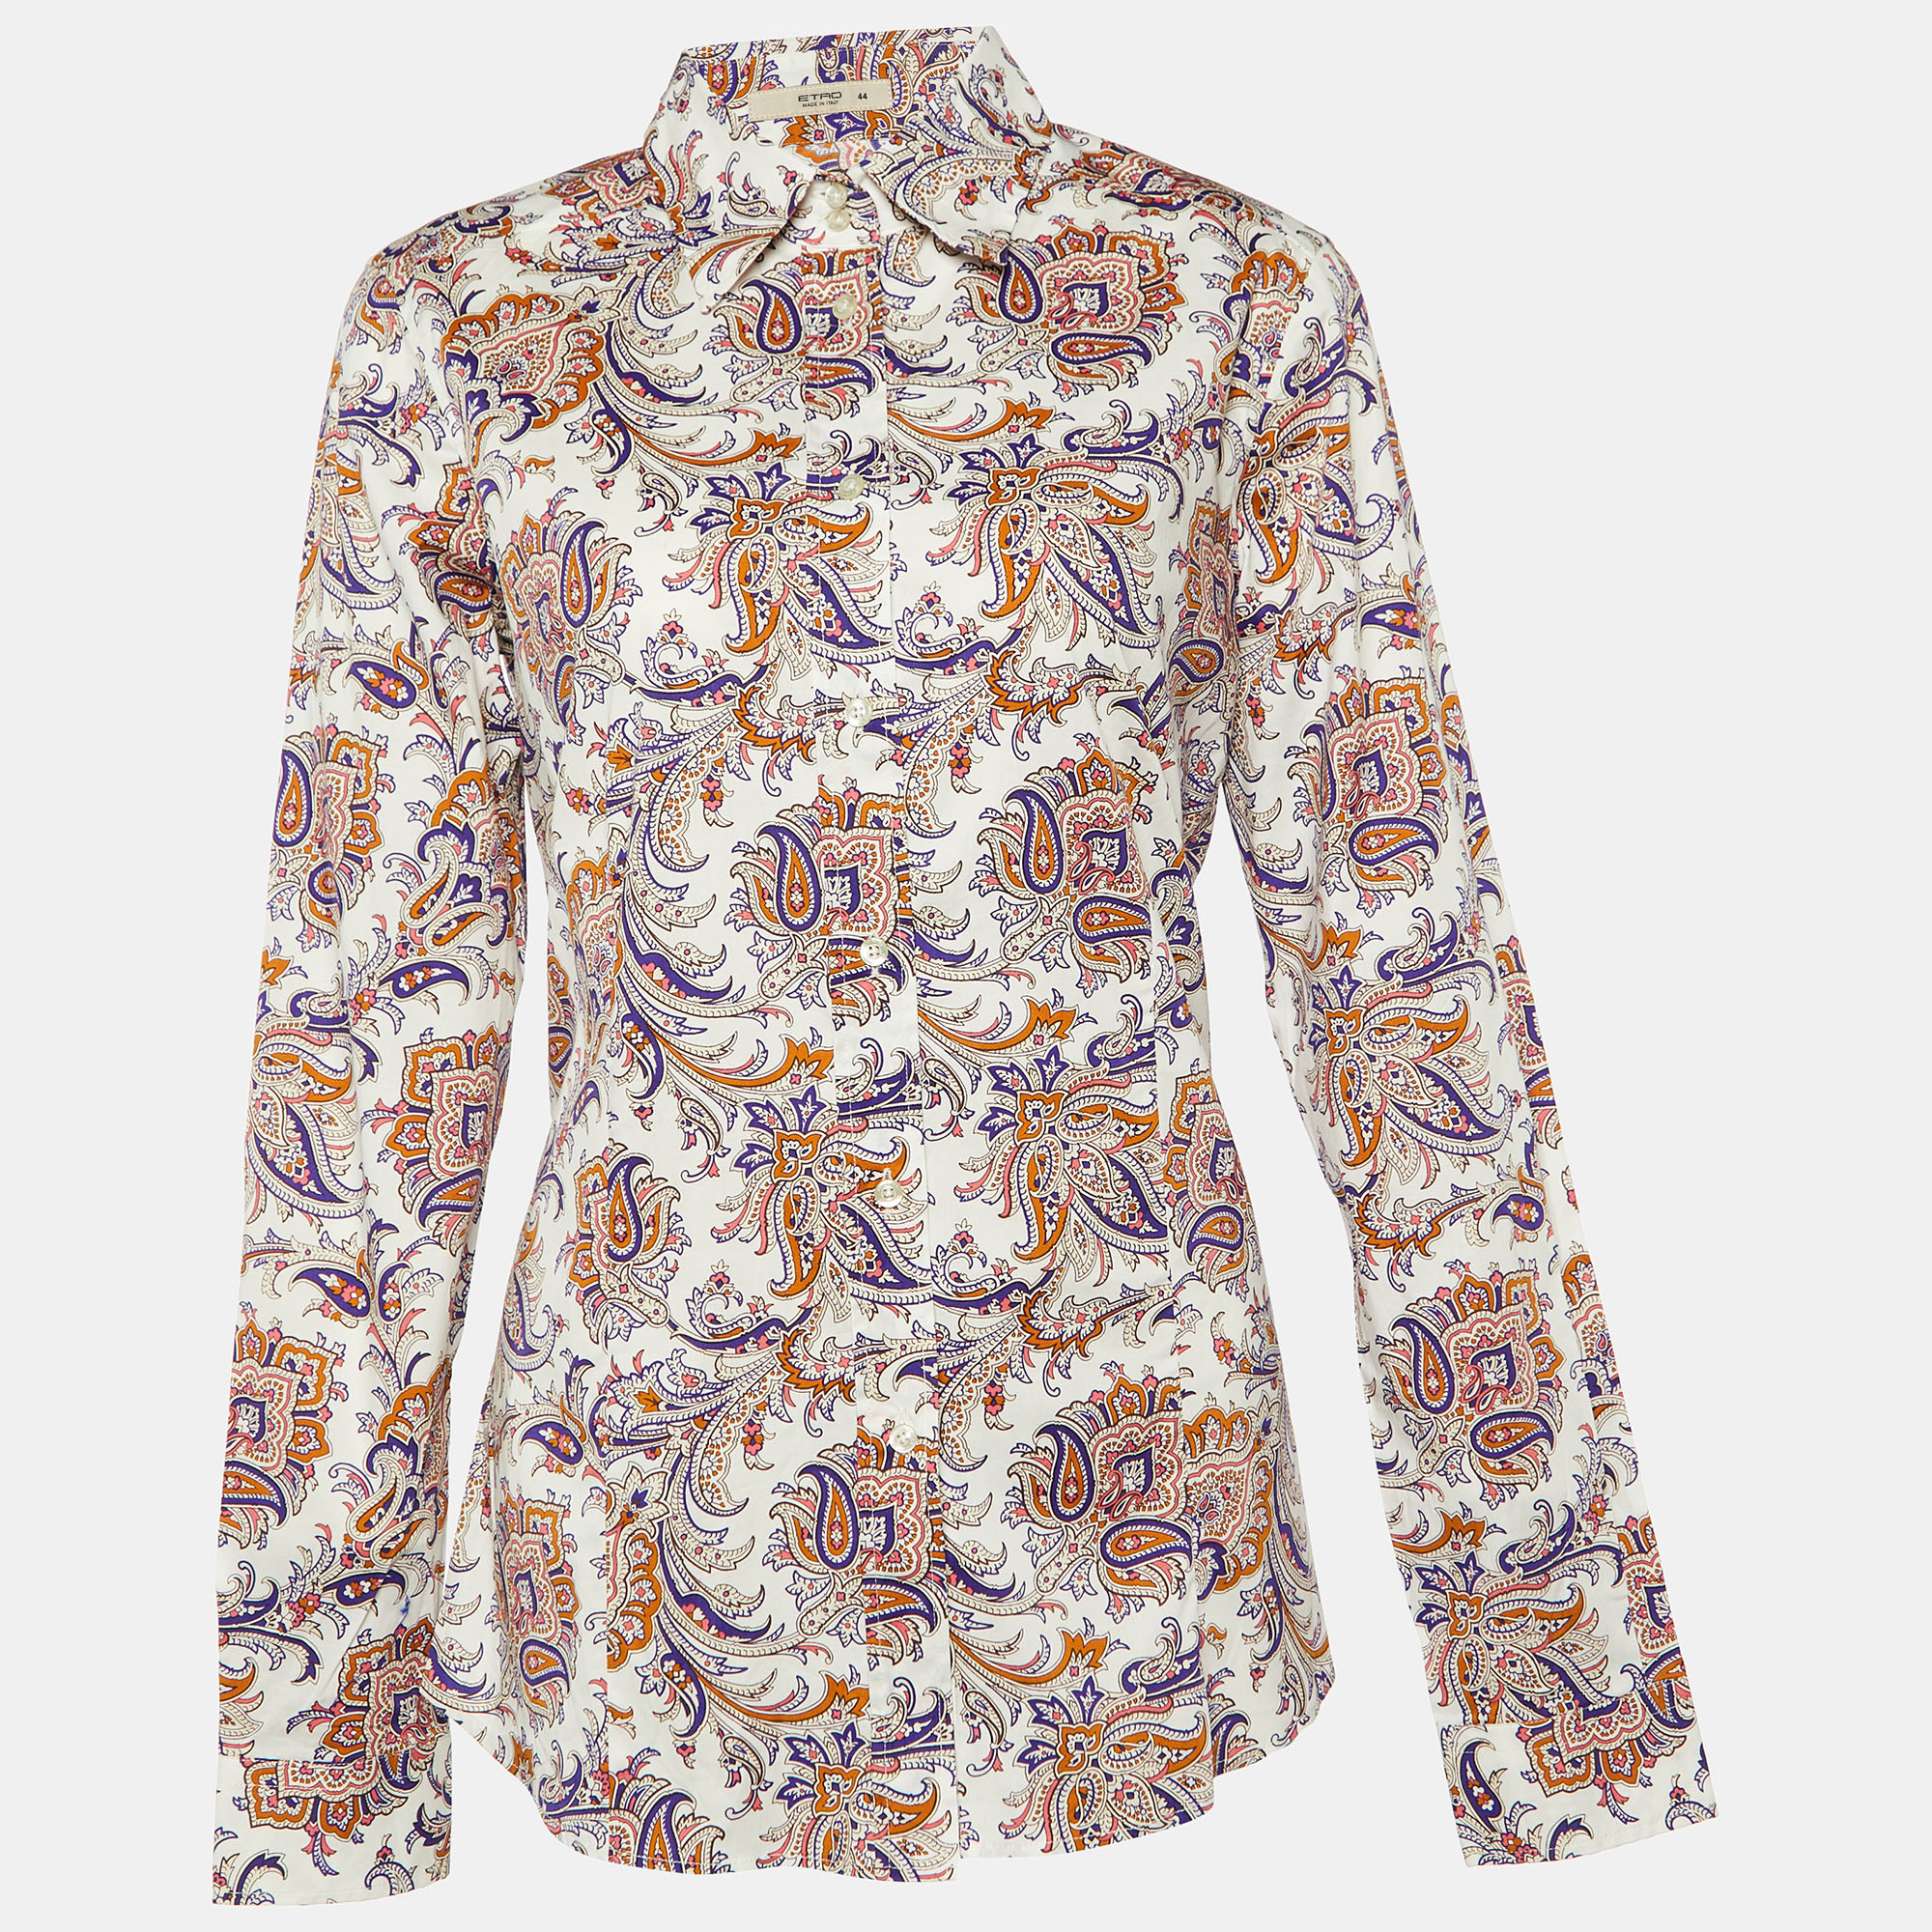 Etro multicolor paisley printed cotton button front shirt m